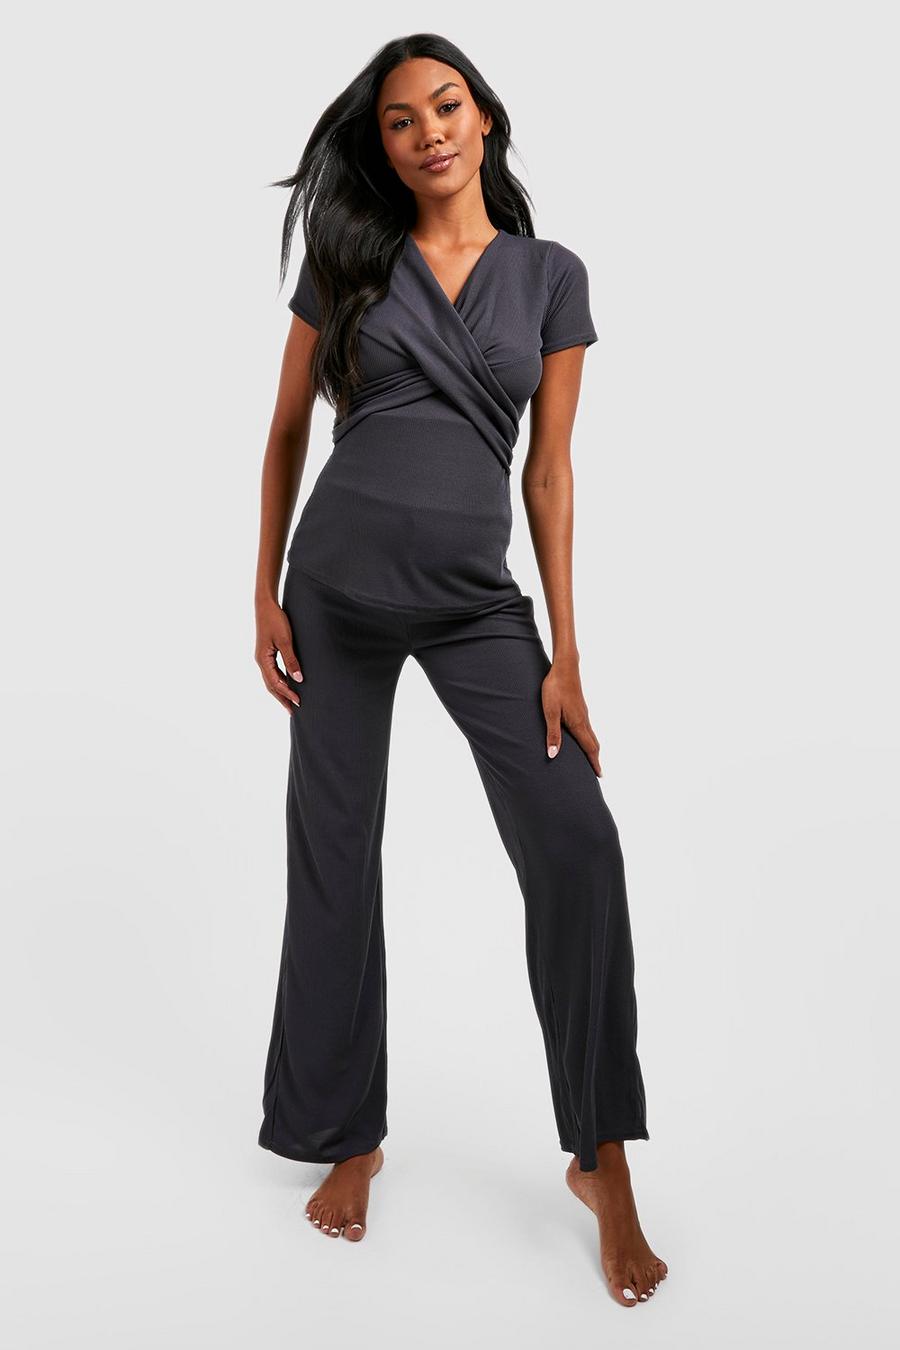 Charcoal grey Maternity Rib Wrap Nursing Pyjama Pants Set